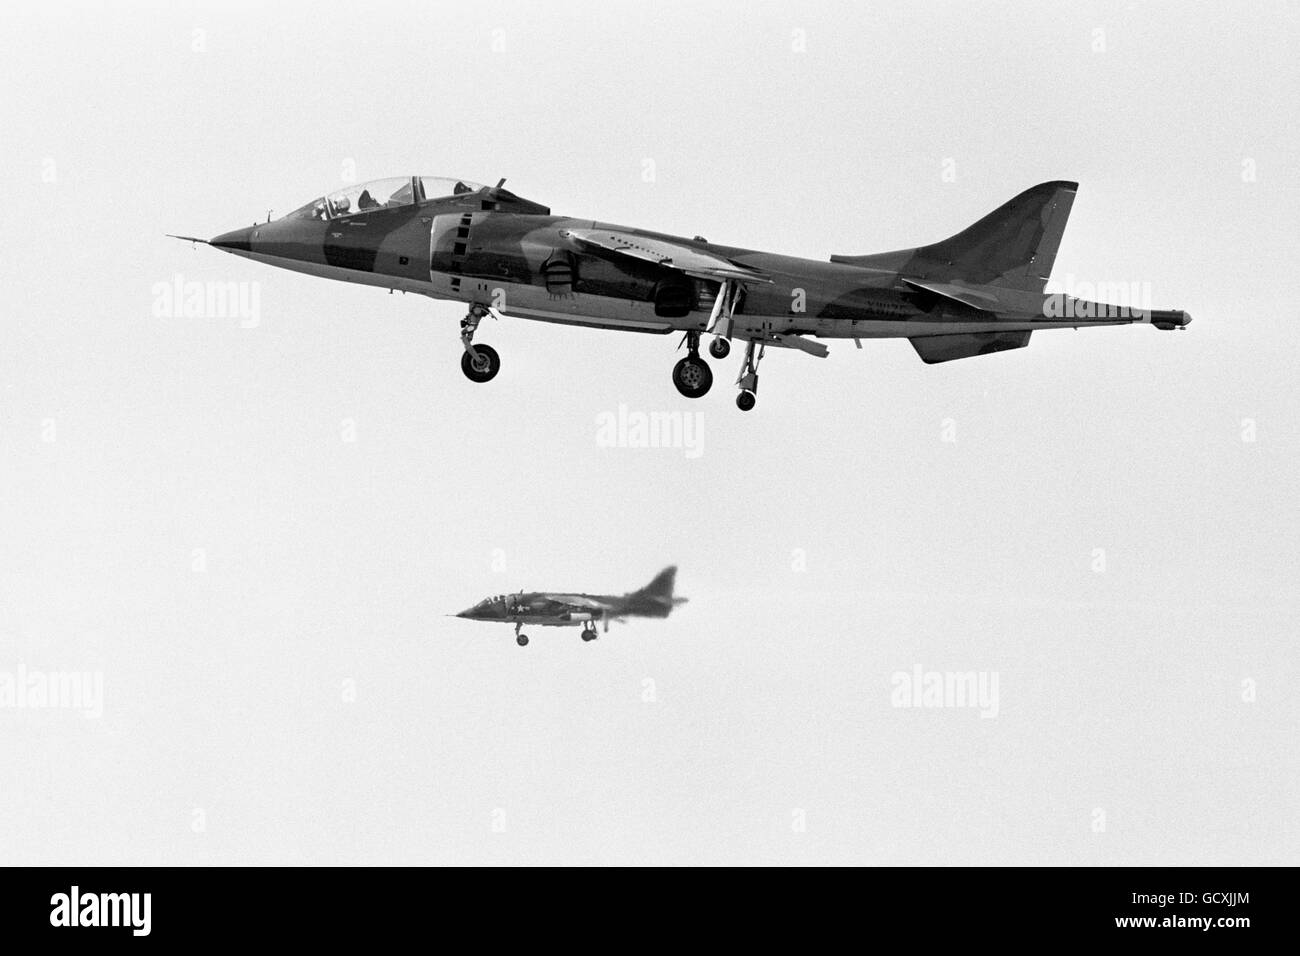 Aviazione - Hawker Siddeley Harrier. Un jet da salto Hawker Siddeley Harrier in volo. Foto Stock